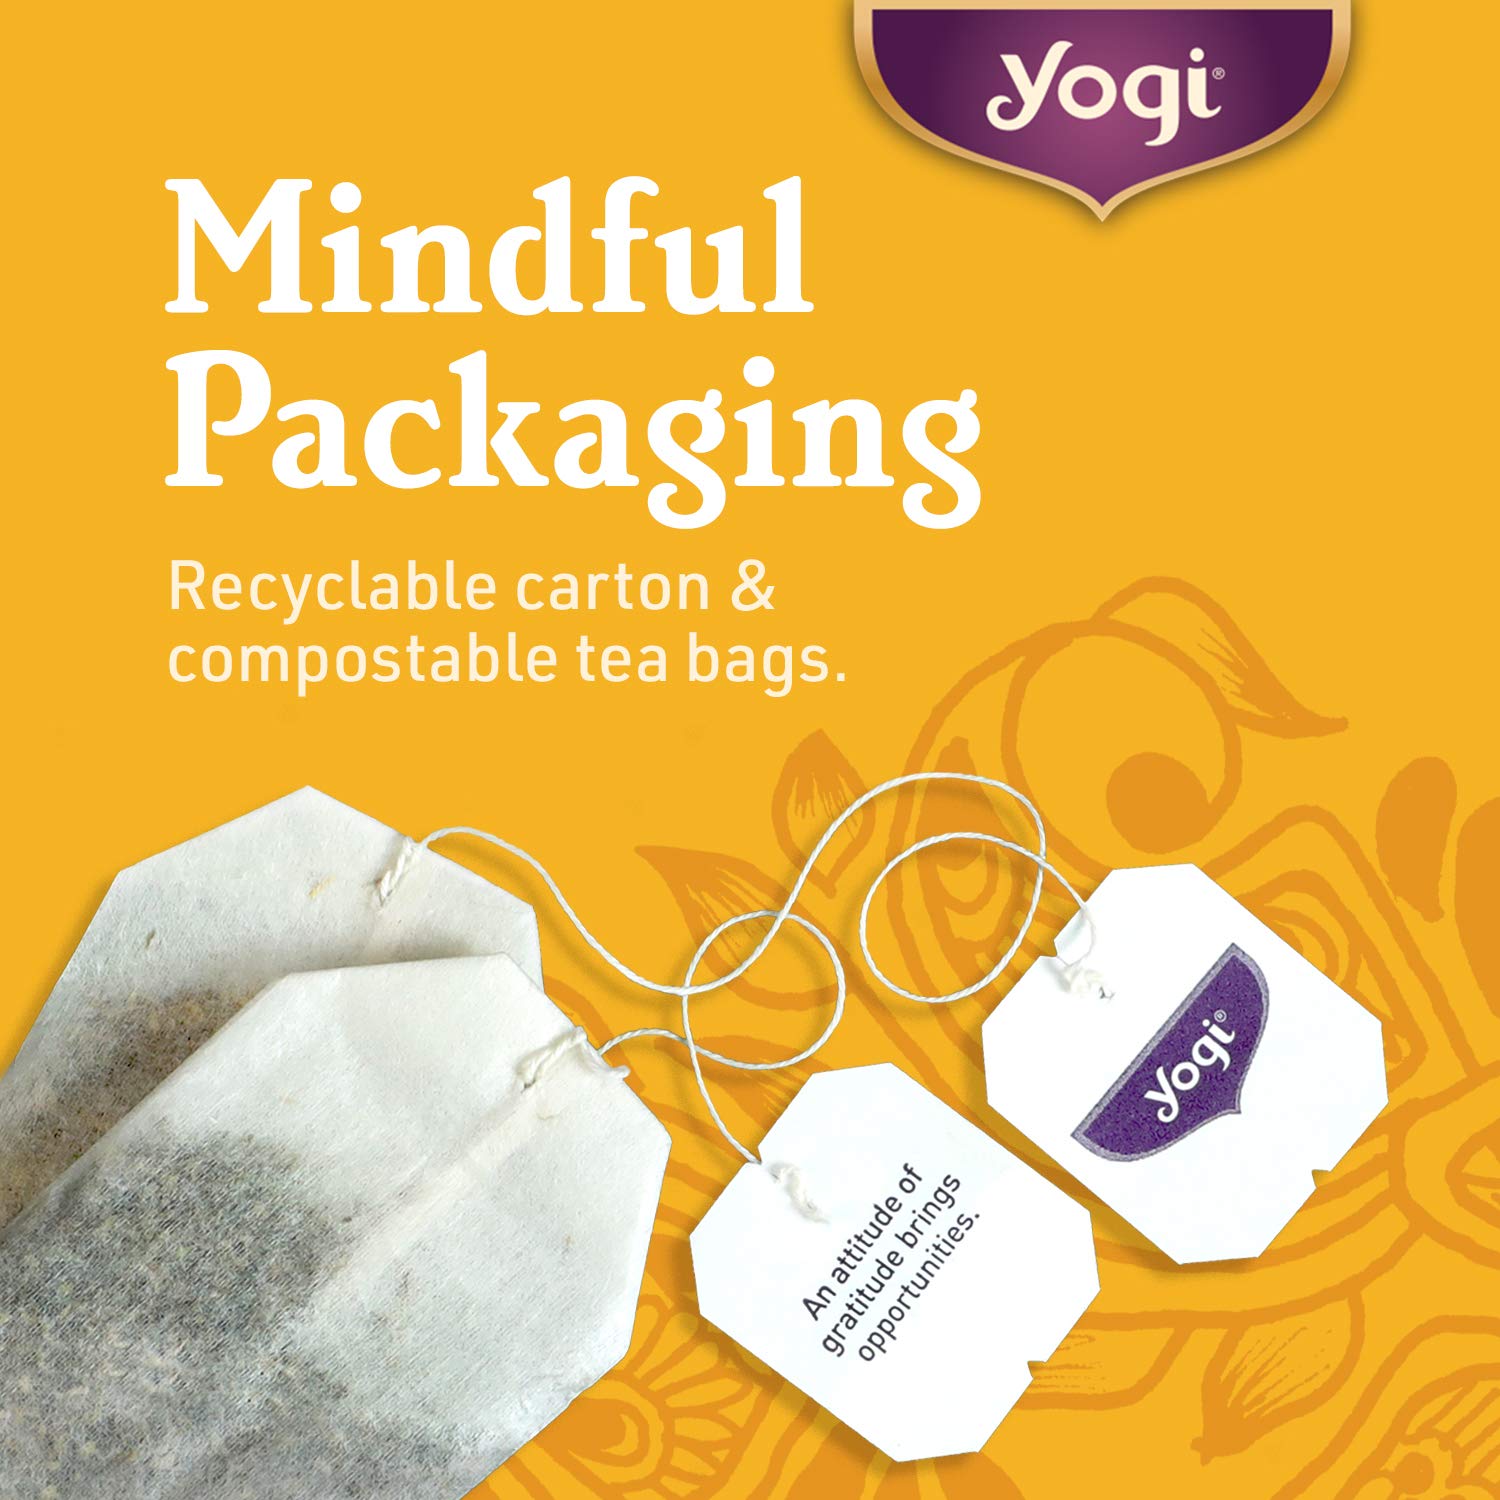 Yogi Tea Peach DeTox Tea - 16 Tea Bags per Pack (4 Packs) - Organic DeTox Tea to Feel Refreshed - Includes Cinnamon Bark, Ginger Root, Cardamom Pod, Burdock Root, Dandelion Root & More